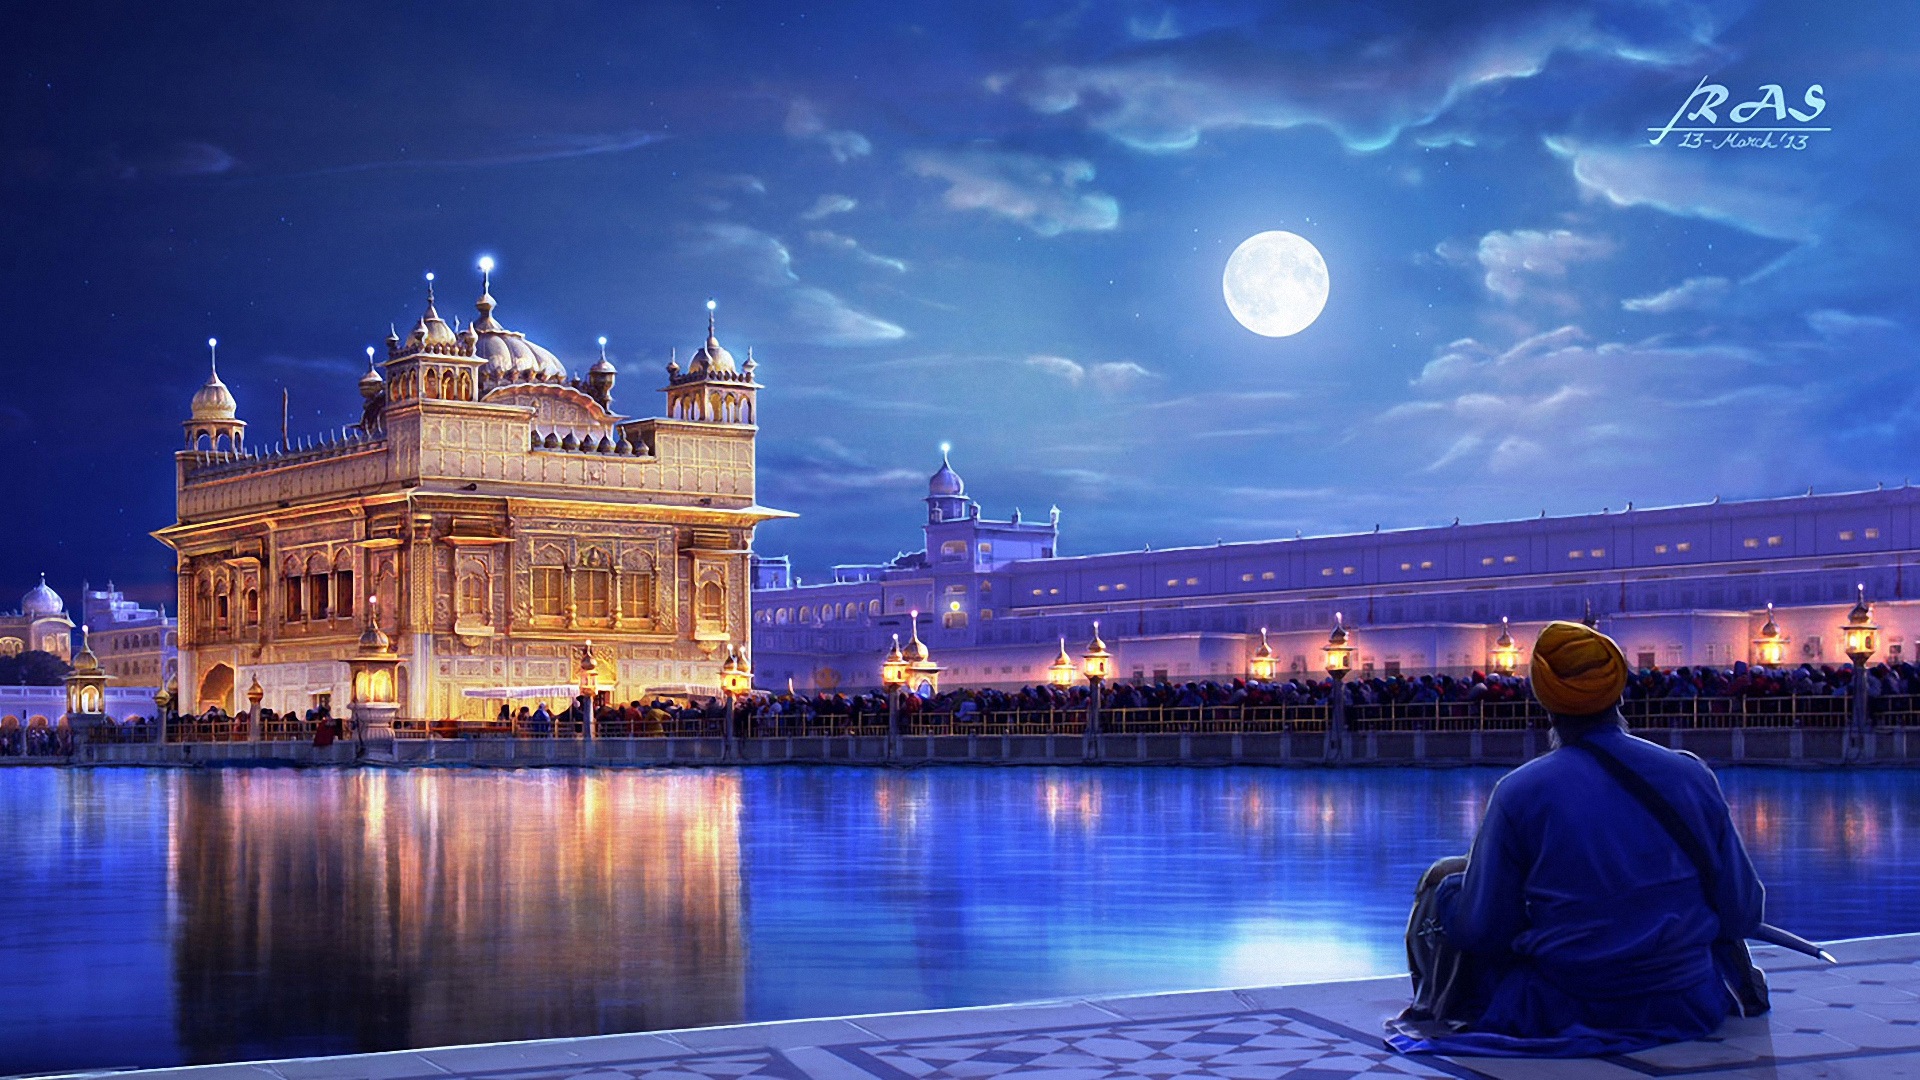 Golden Temple Amritsar Punjab India Wallpaper HD